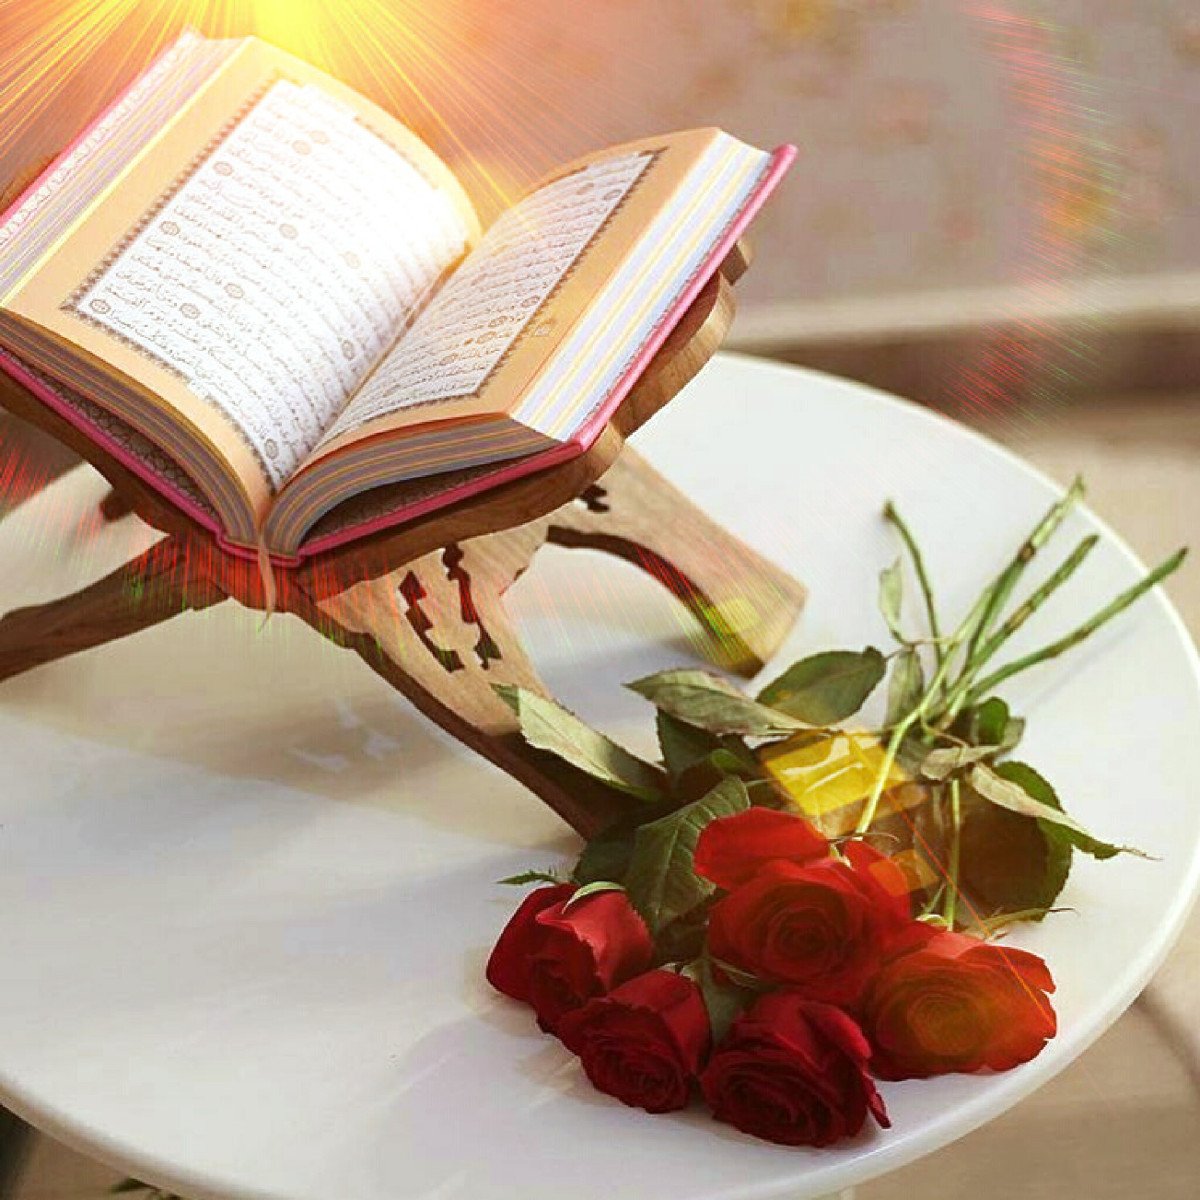 Quron kitob. Коран и цветы. Коран с цветами. Красивый Коран. Коран красивый с цветами.